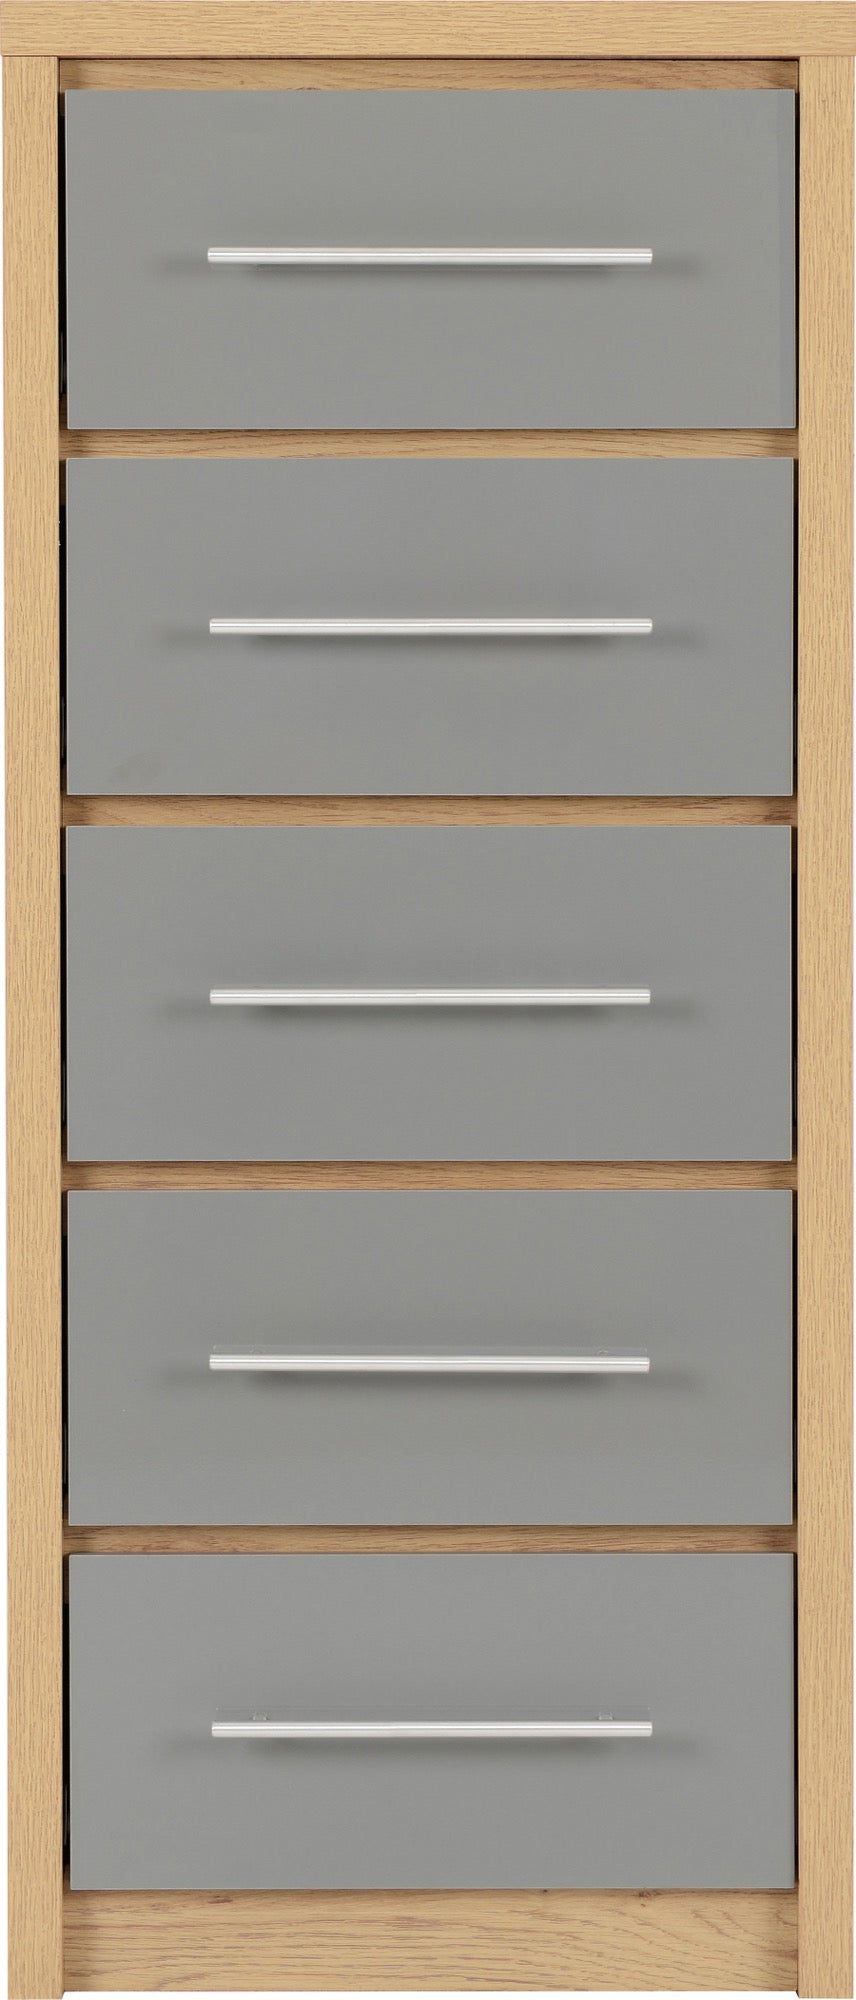 drawer narrow chest